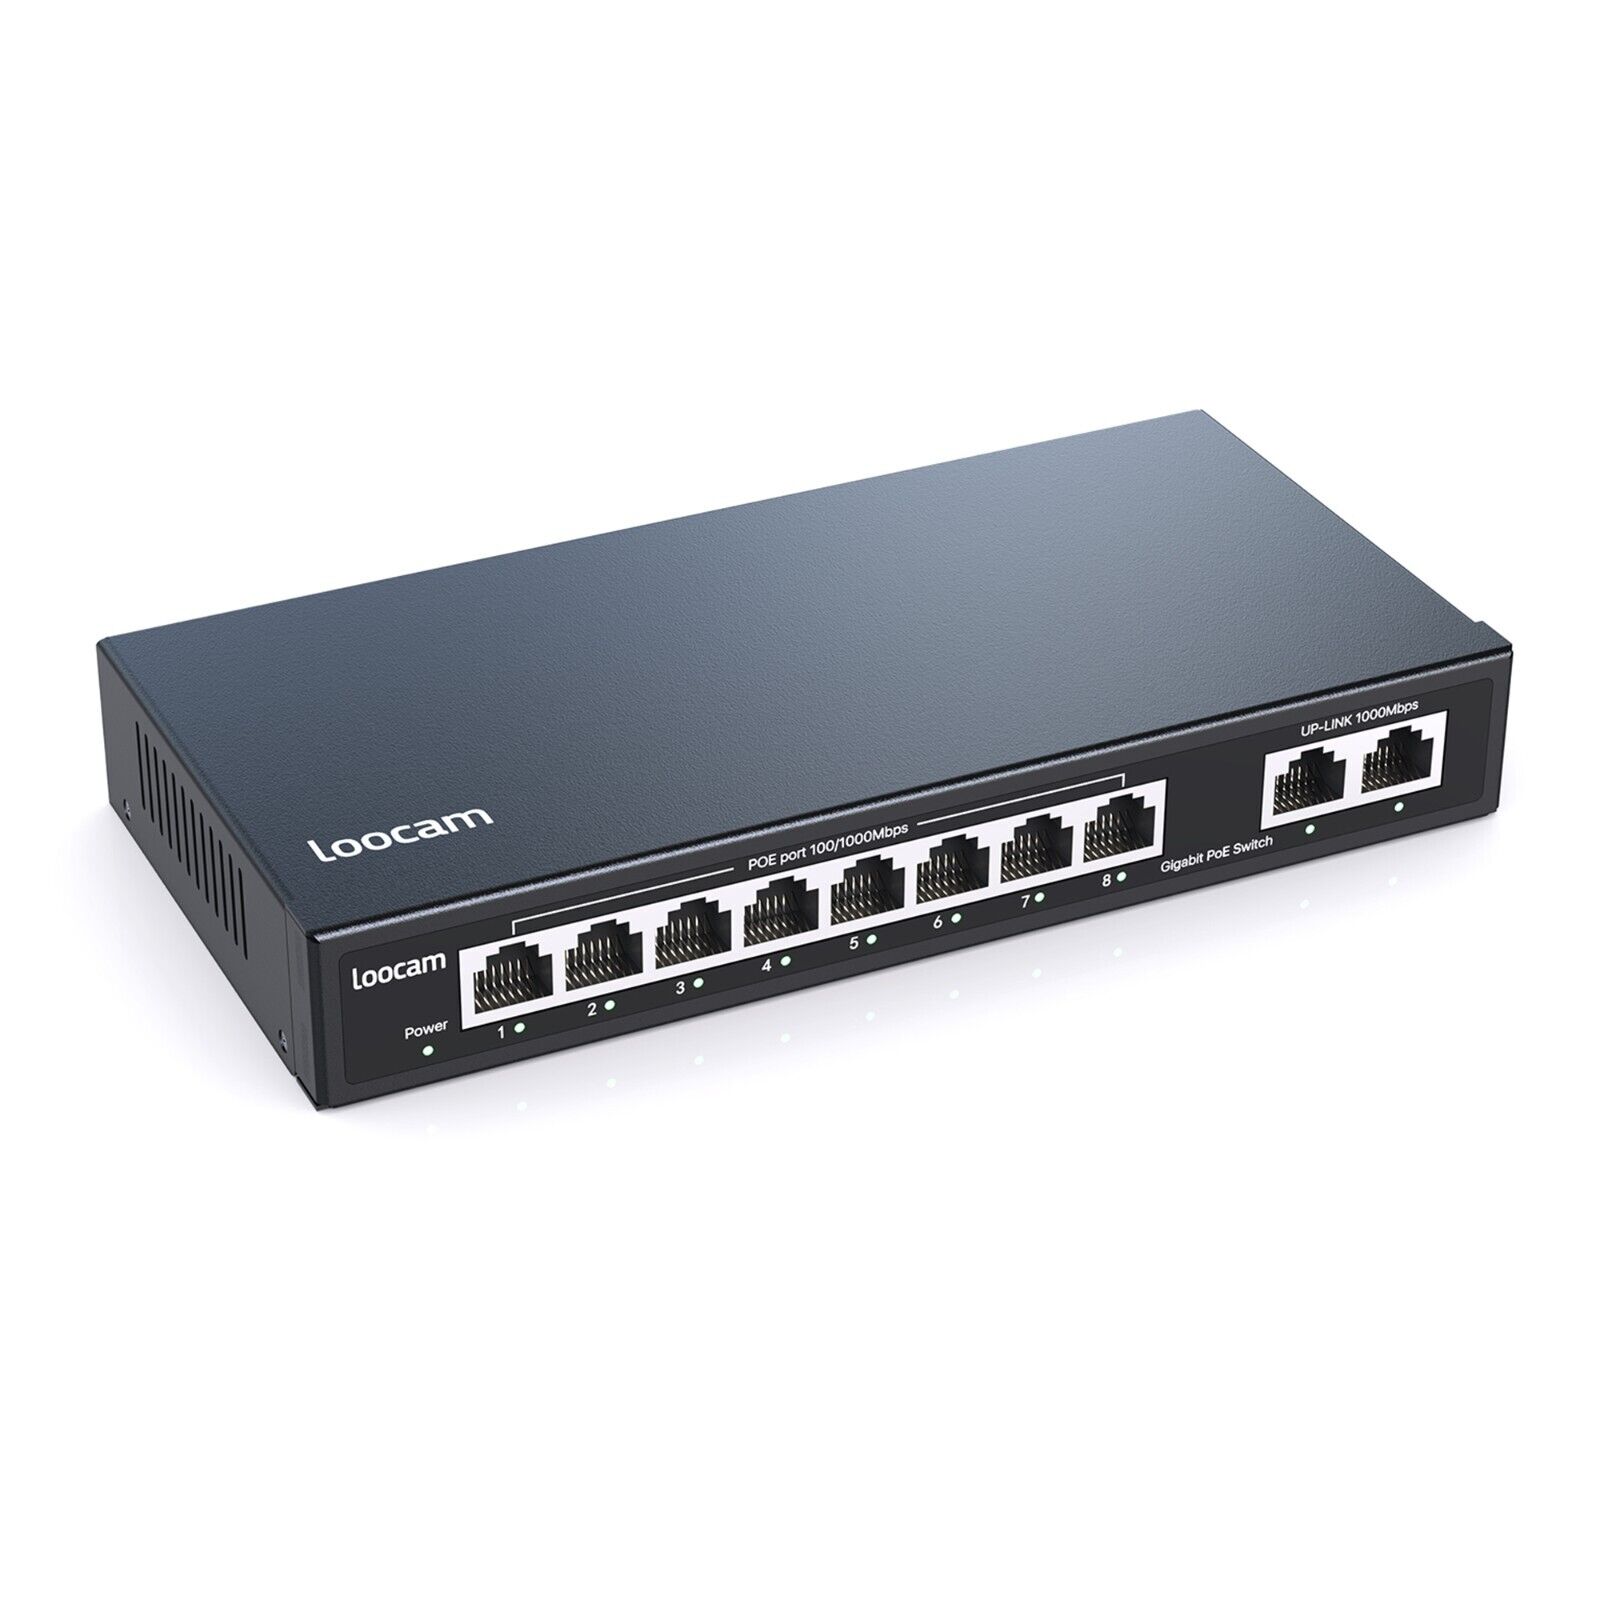 Loocam Gigabit PoE Switch 8 Port 96W 2 Uplink Port Unmanaged Ethernet Switch